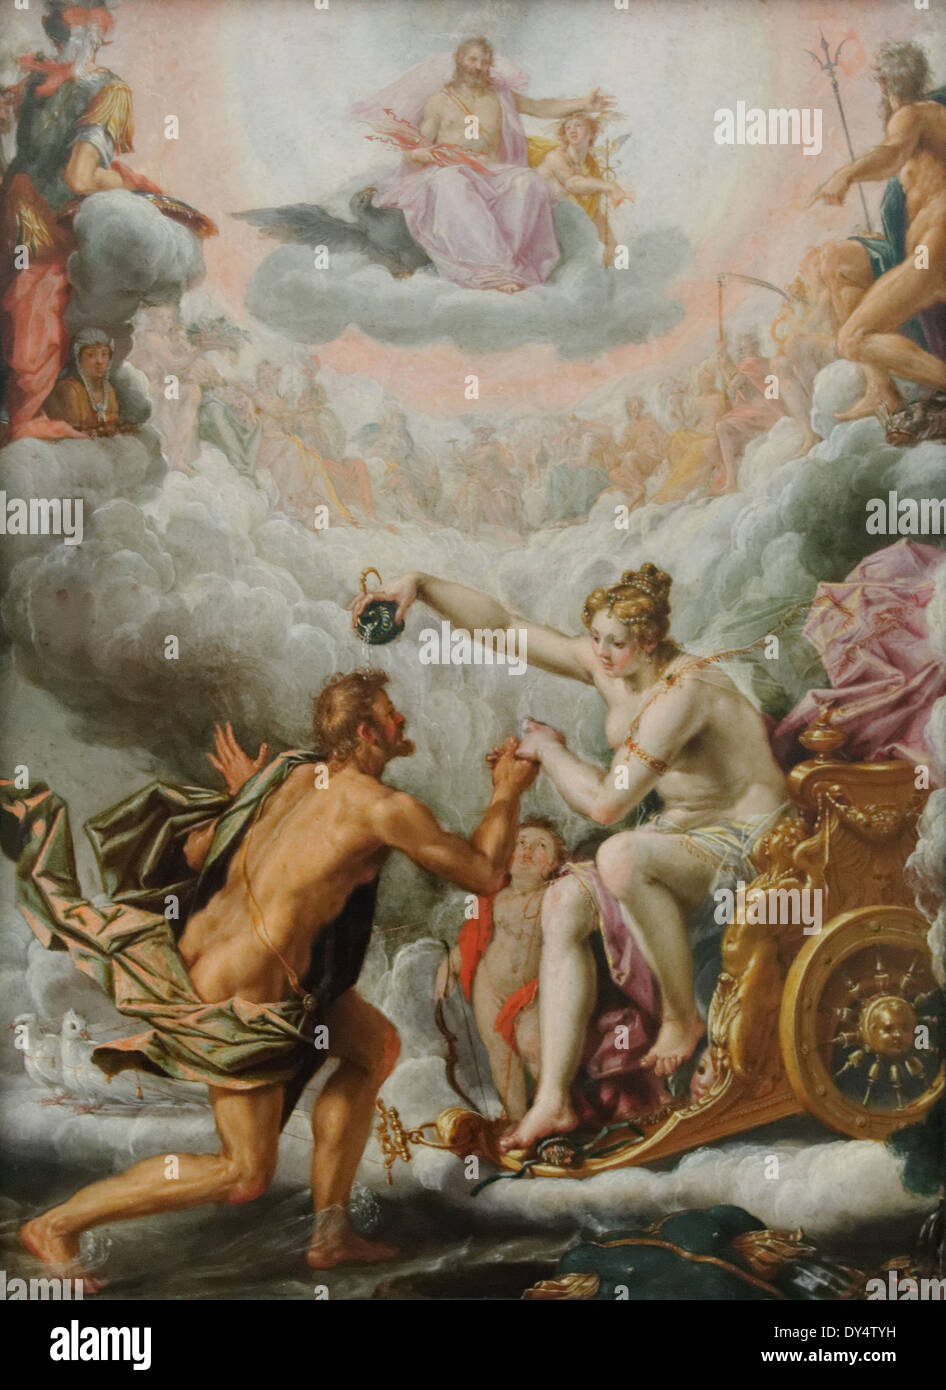 Peter de Witte - Aeneas and Venus in Olympus - XVII th Century - Flemish School - Gemäldegalerie - Berlin Stock Photo